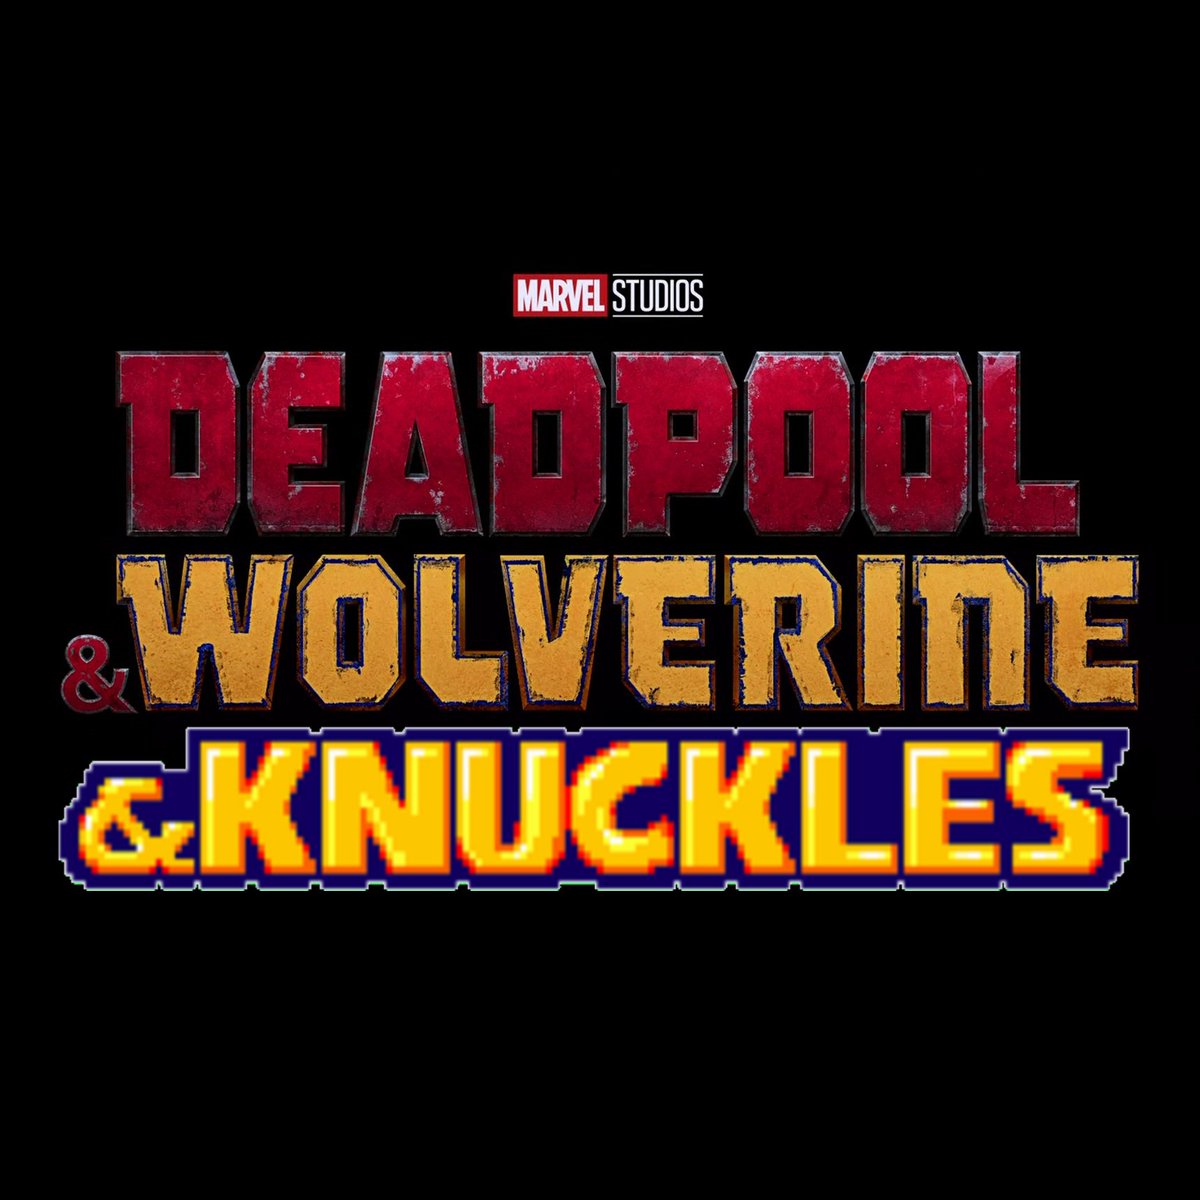 can't resist the urge.
#DeadpoolAndWolverine 
#AndKnuckles